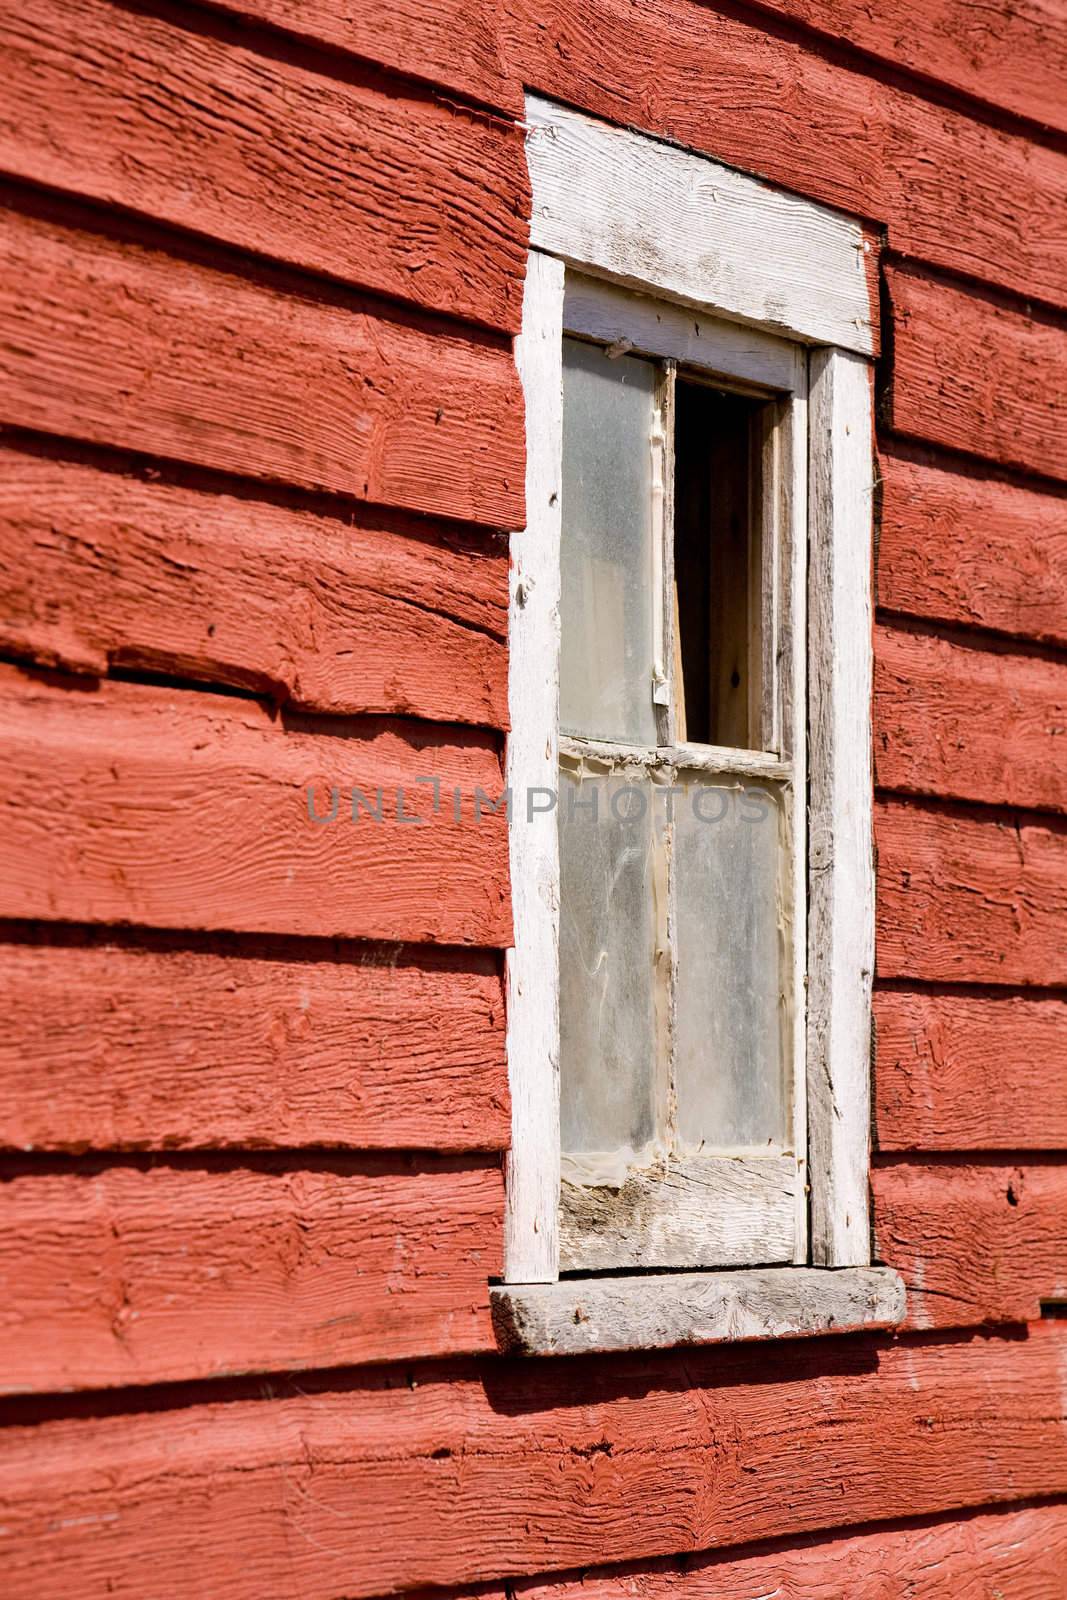 An old red barn window